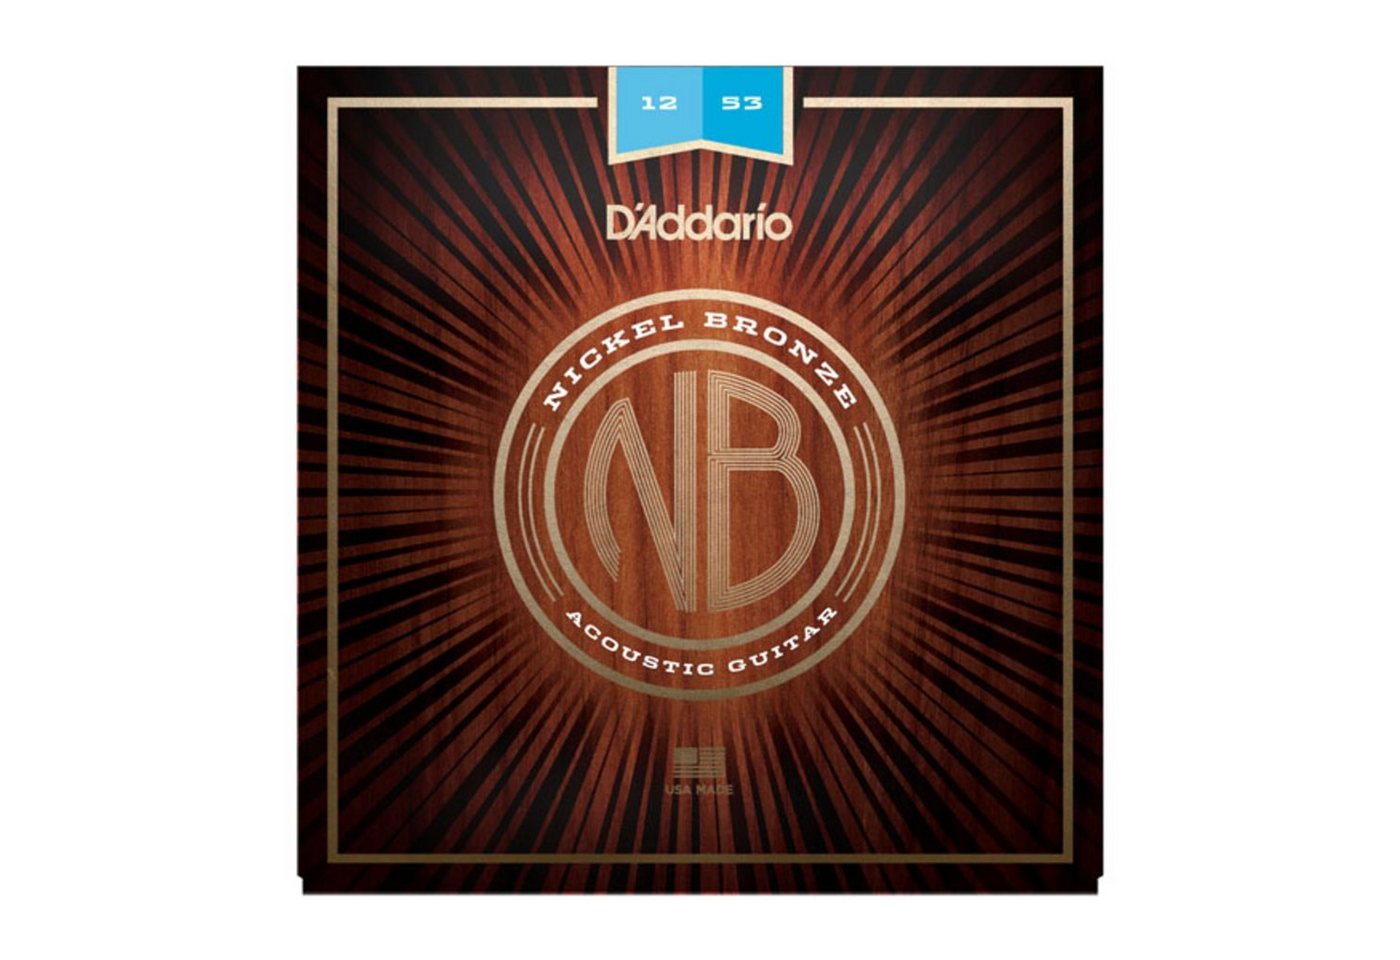 Daddario Saiten, (NB1253 12-53 Nickel Bronze Acoustic Light), NB1253 12-53 Nickel Bronze Acoustic Light - Westerngitarrensaiten von Daddario